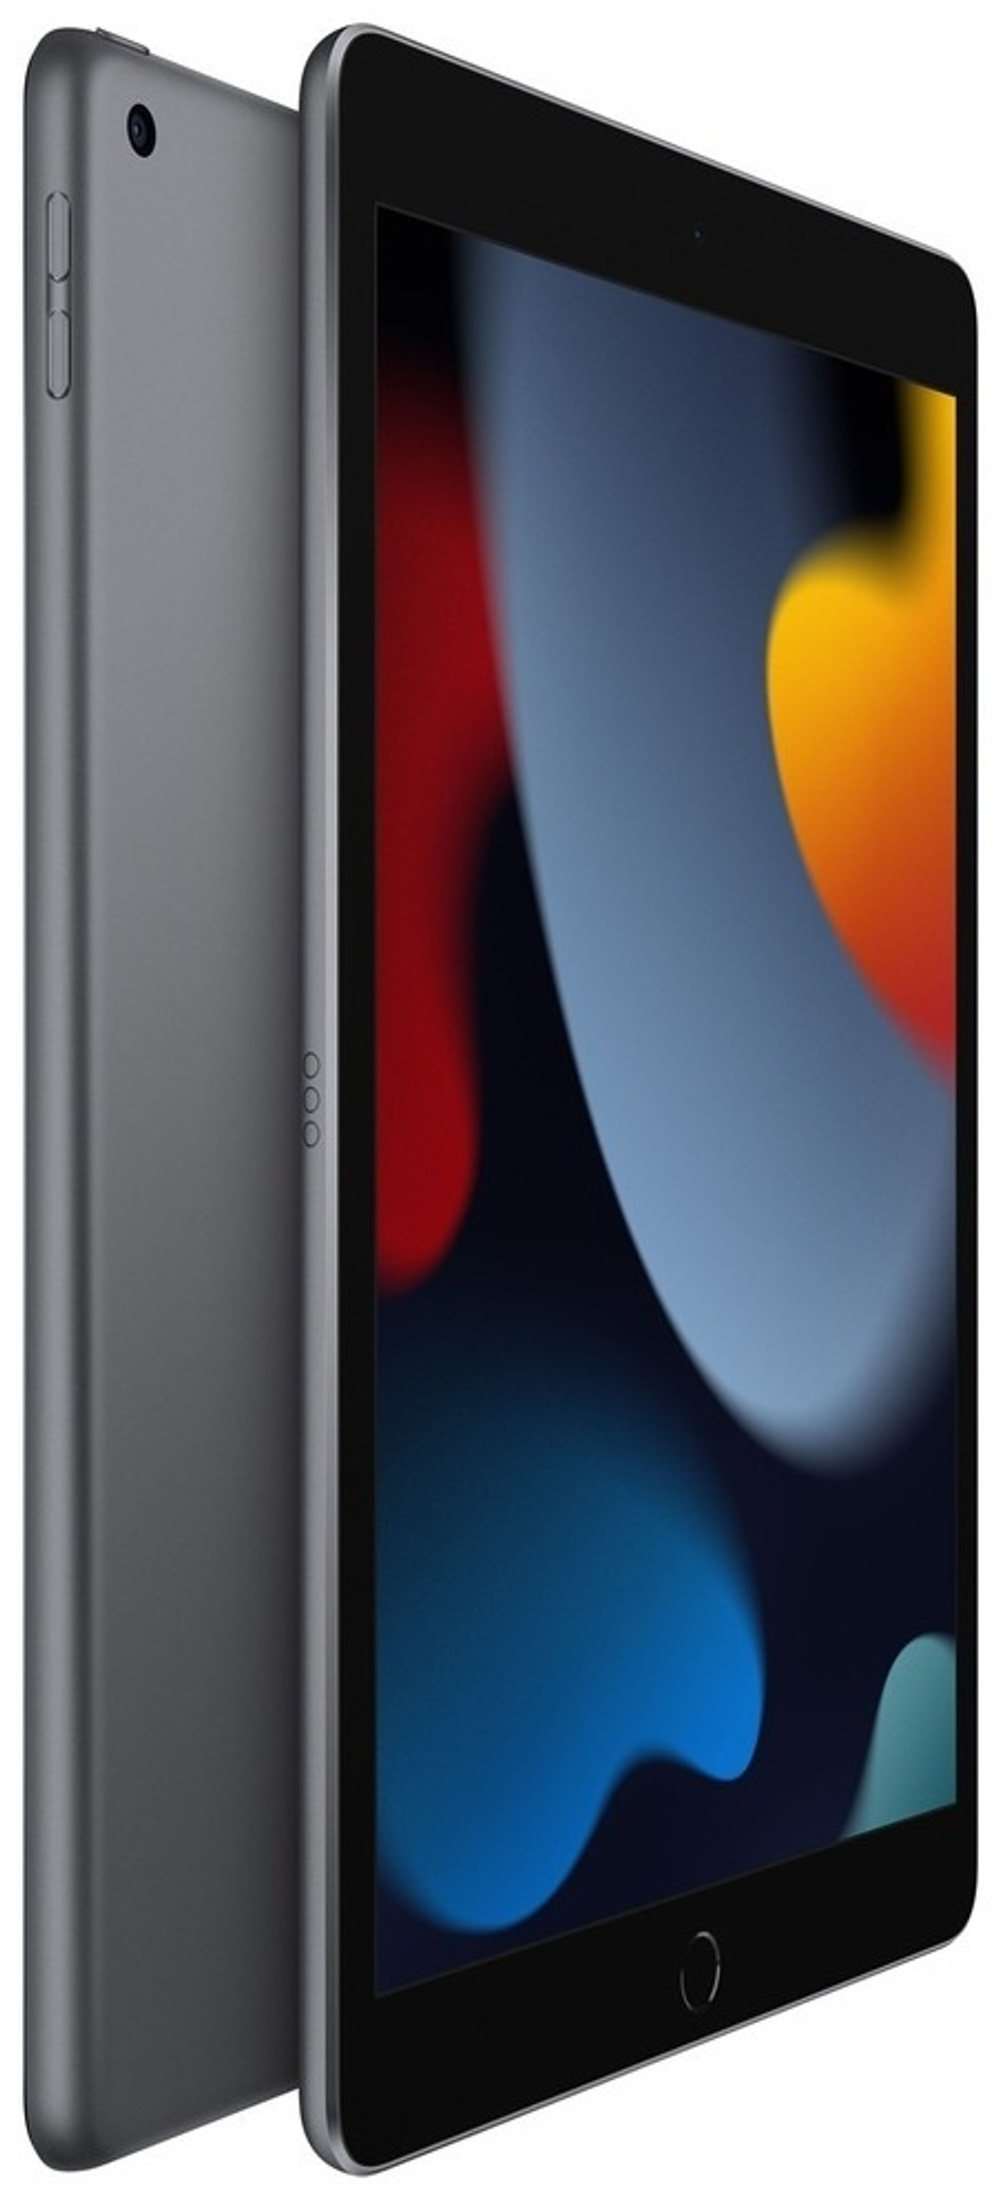 Планшет Apple iPad 2021 Wi-Fi 10.2 дюйм 3 Гб/64 Гб серый